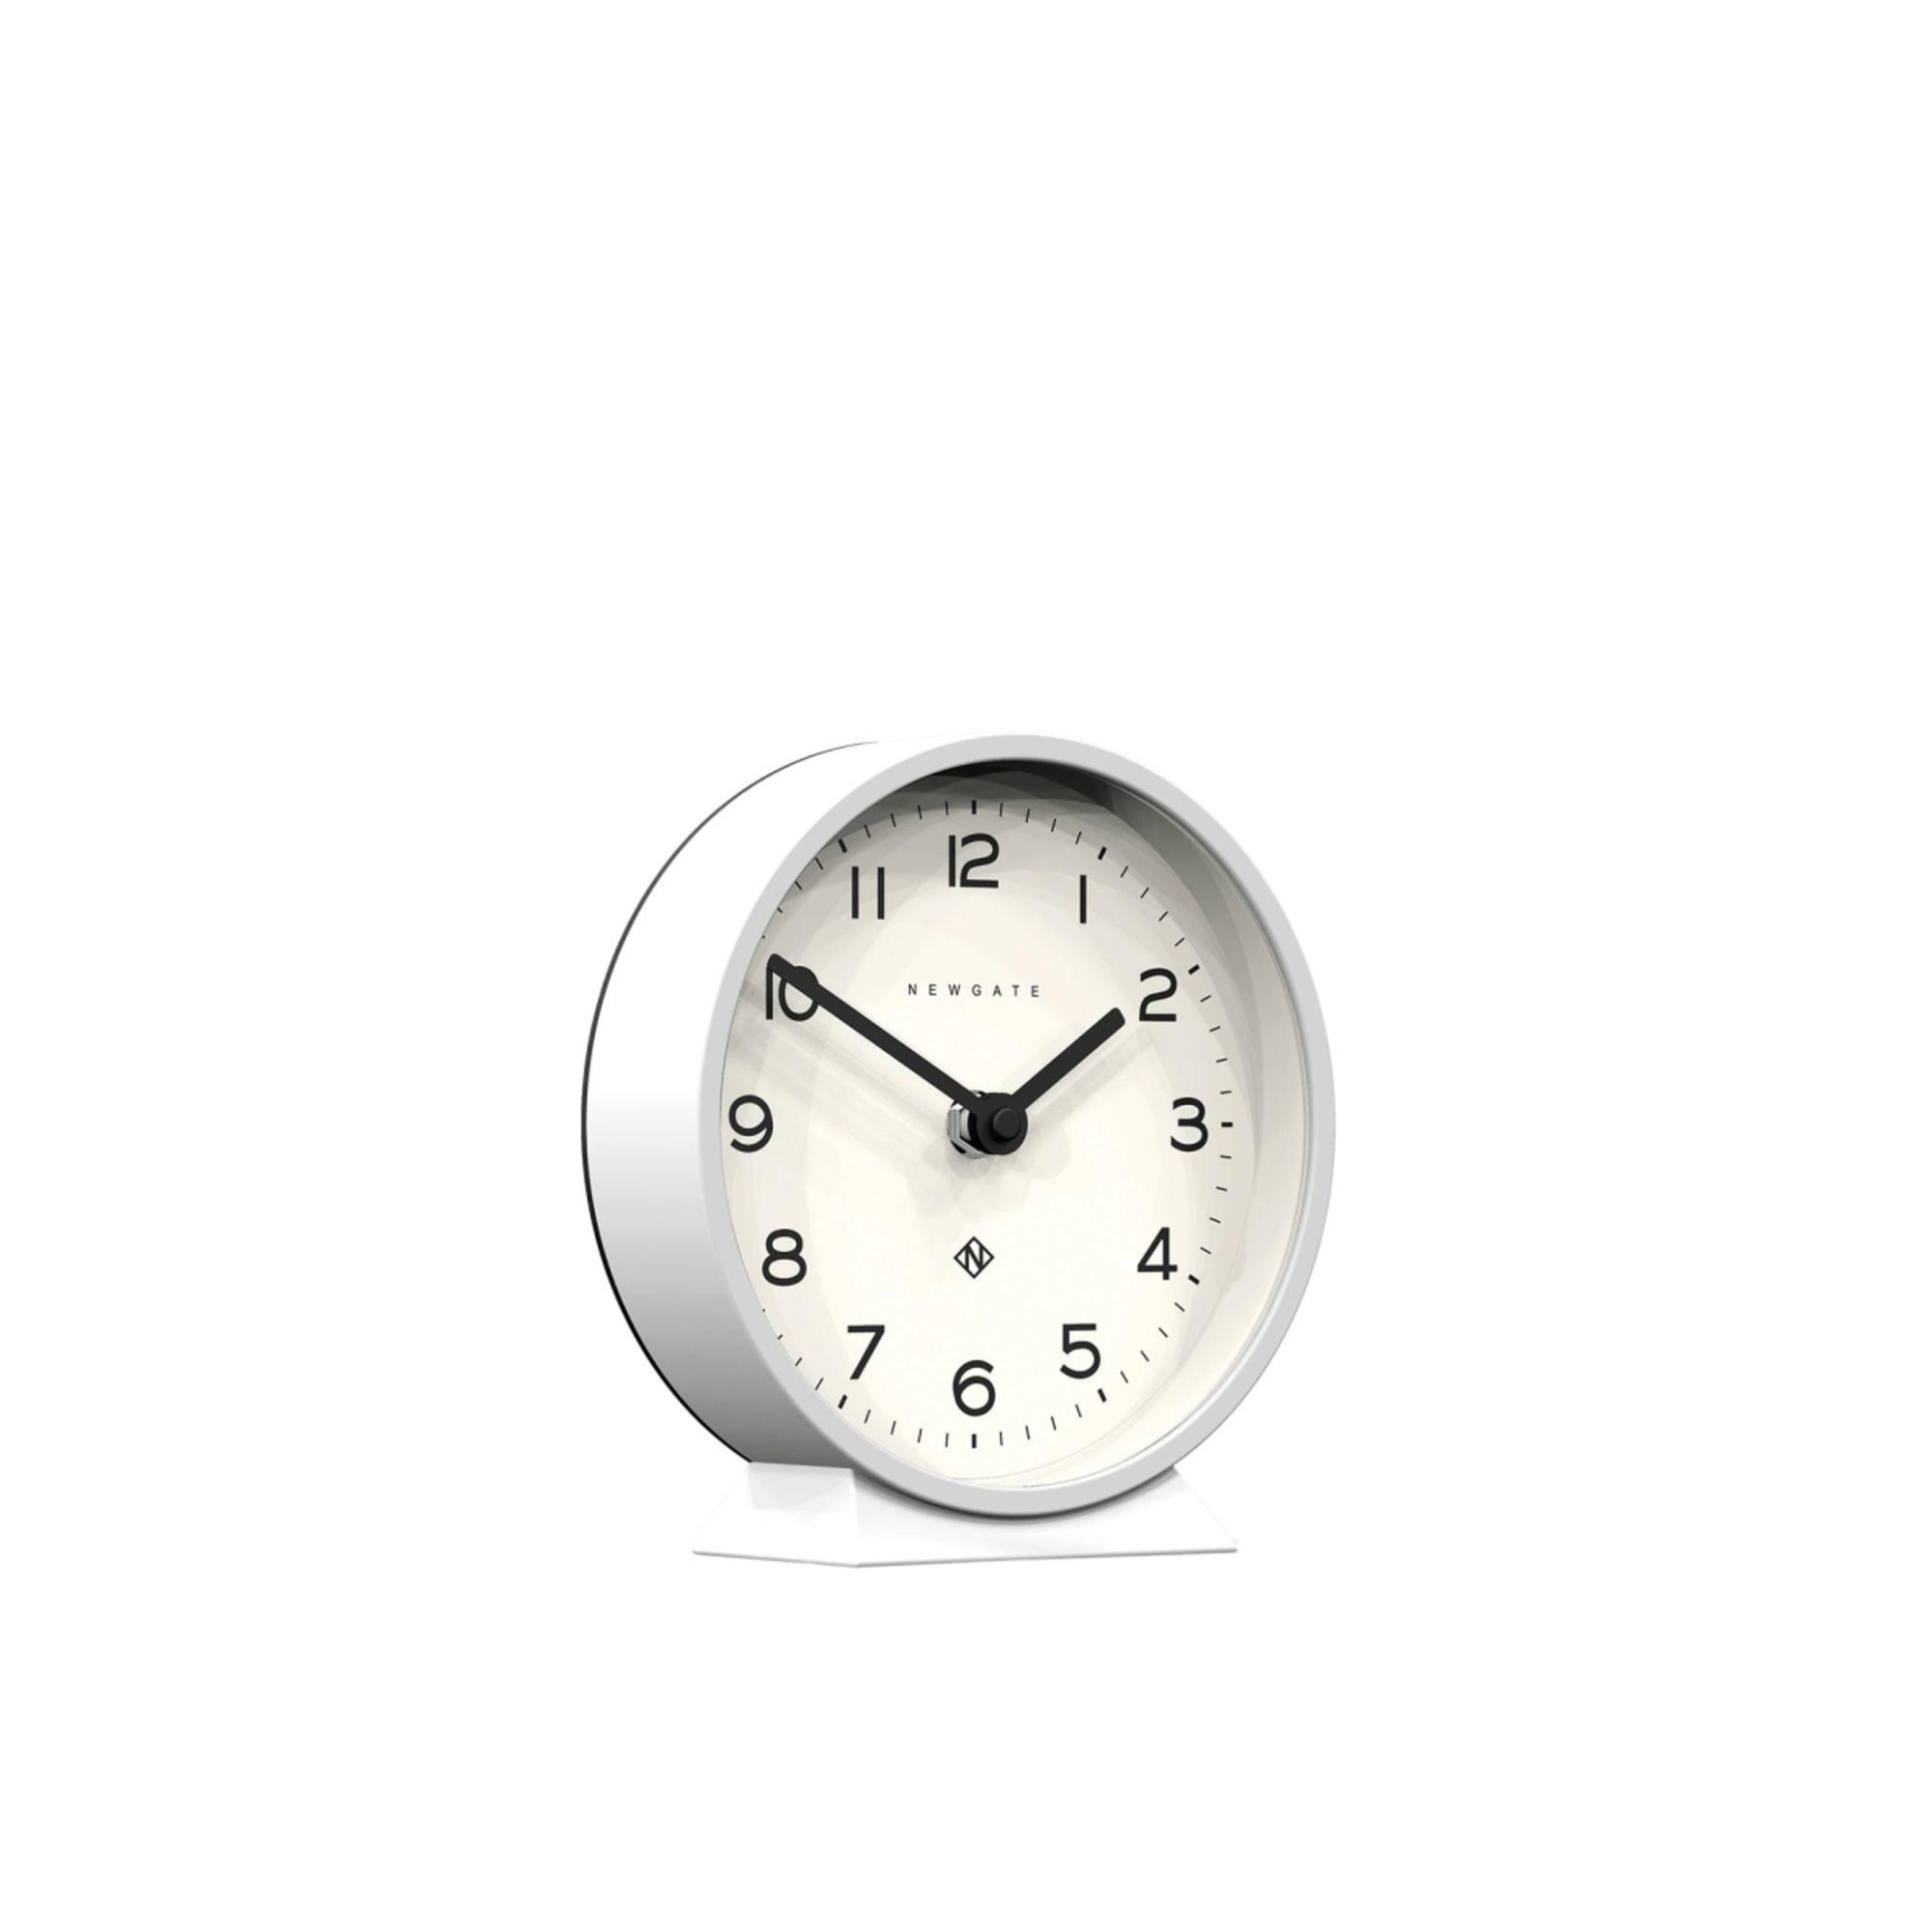 Newgate M Mantel Mantel Clock Pebble White Image 3